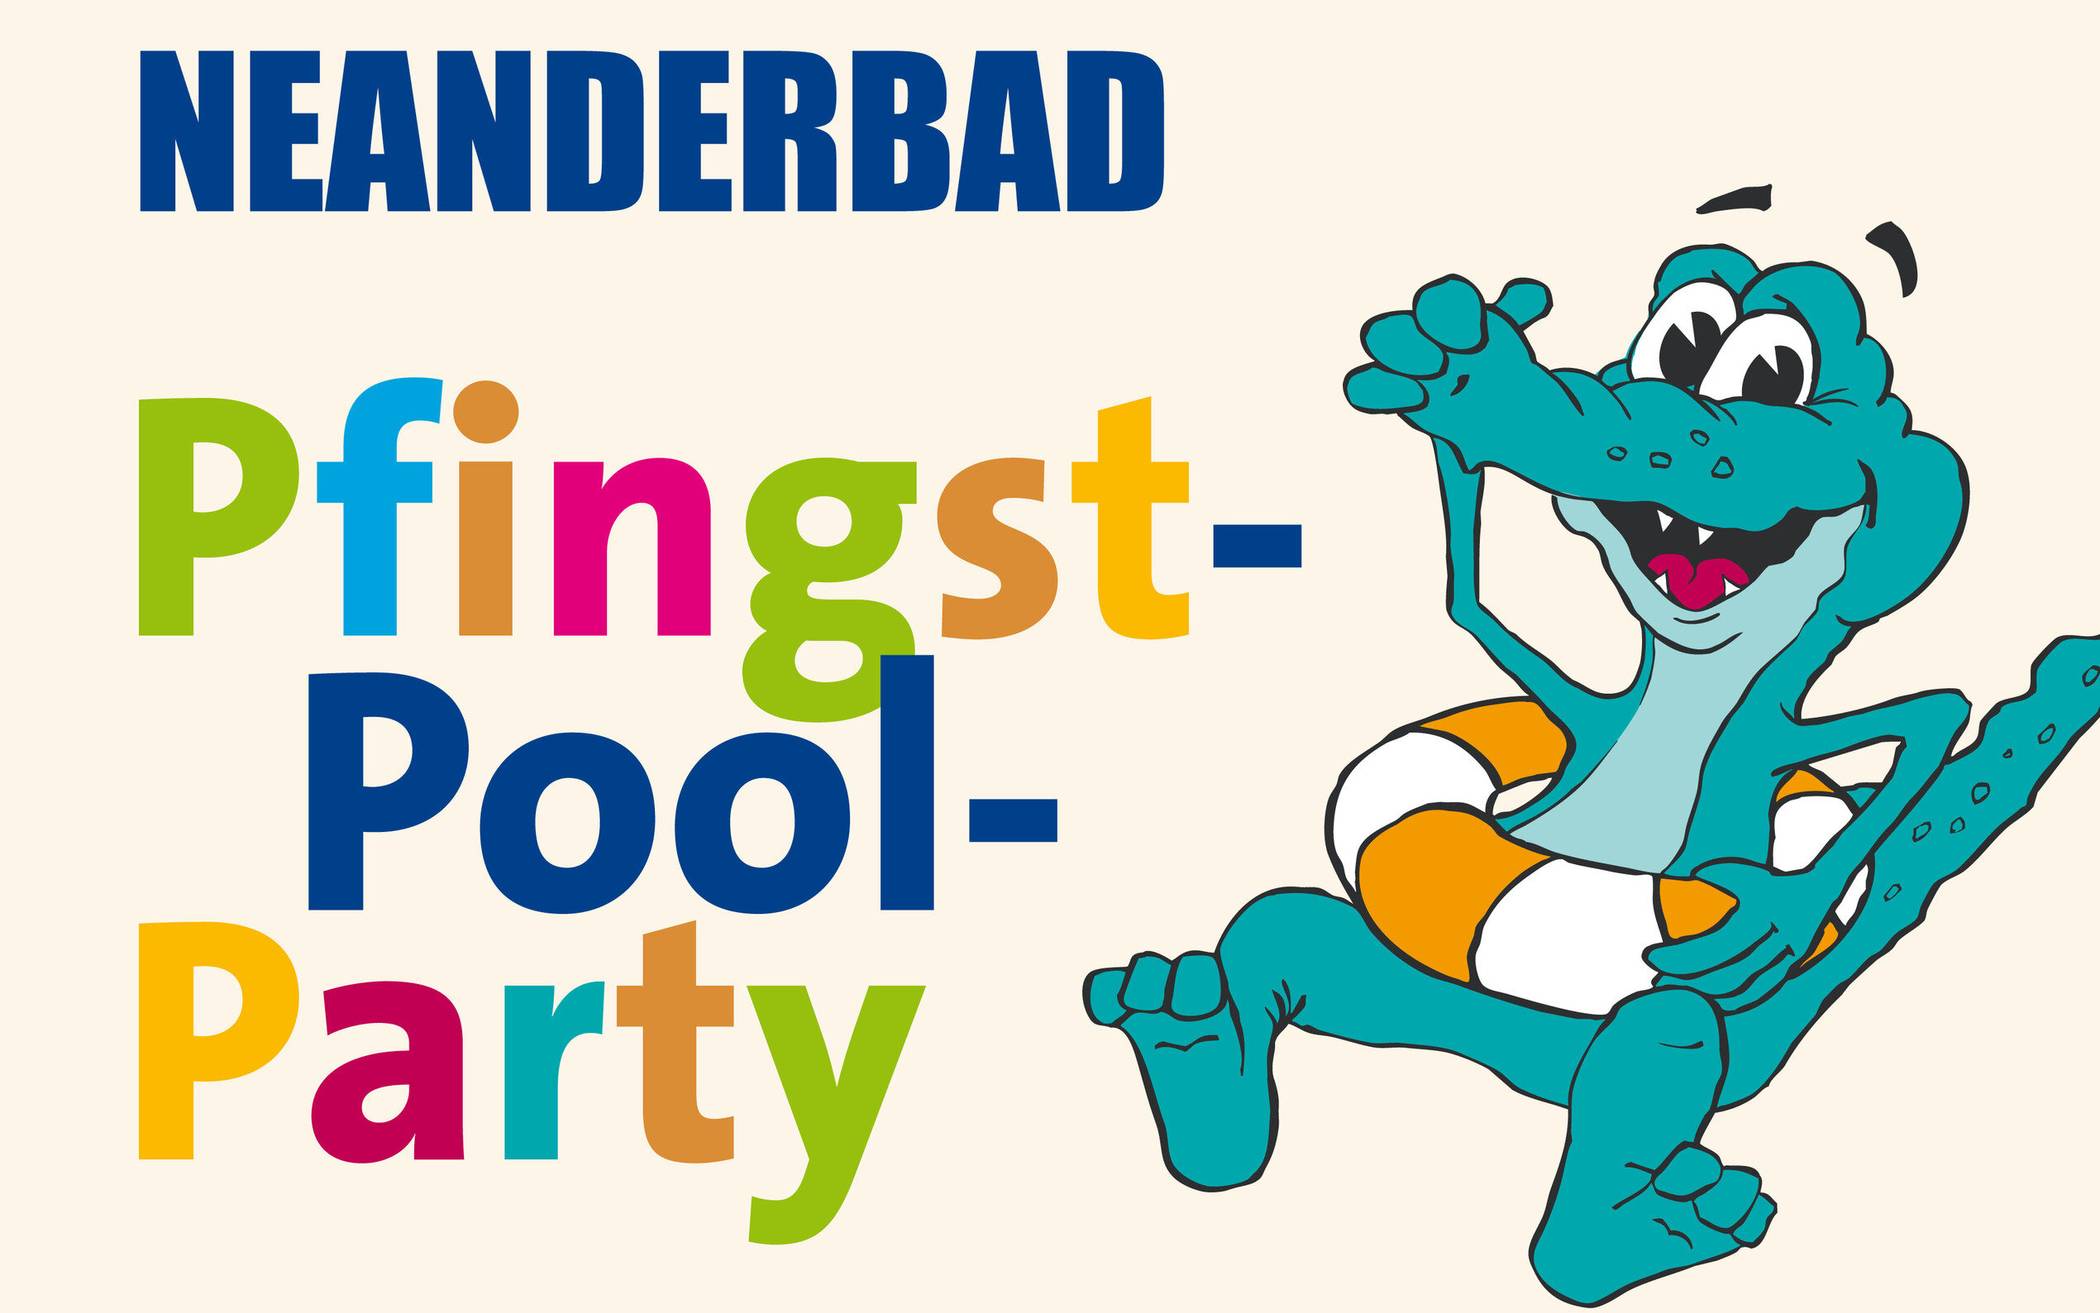 Pfingst-Pool-Party im Neanderbad am 18. Mai​